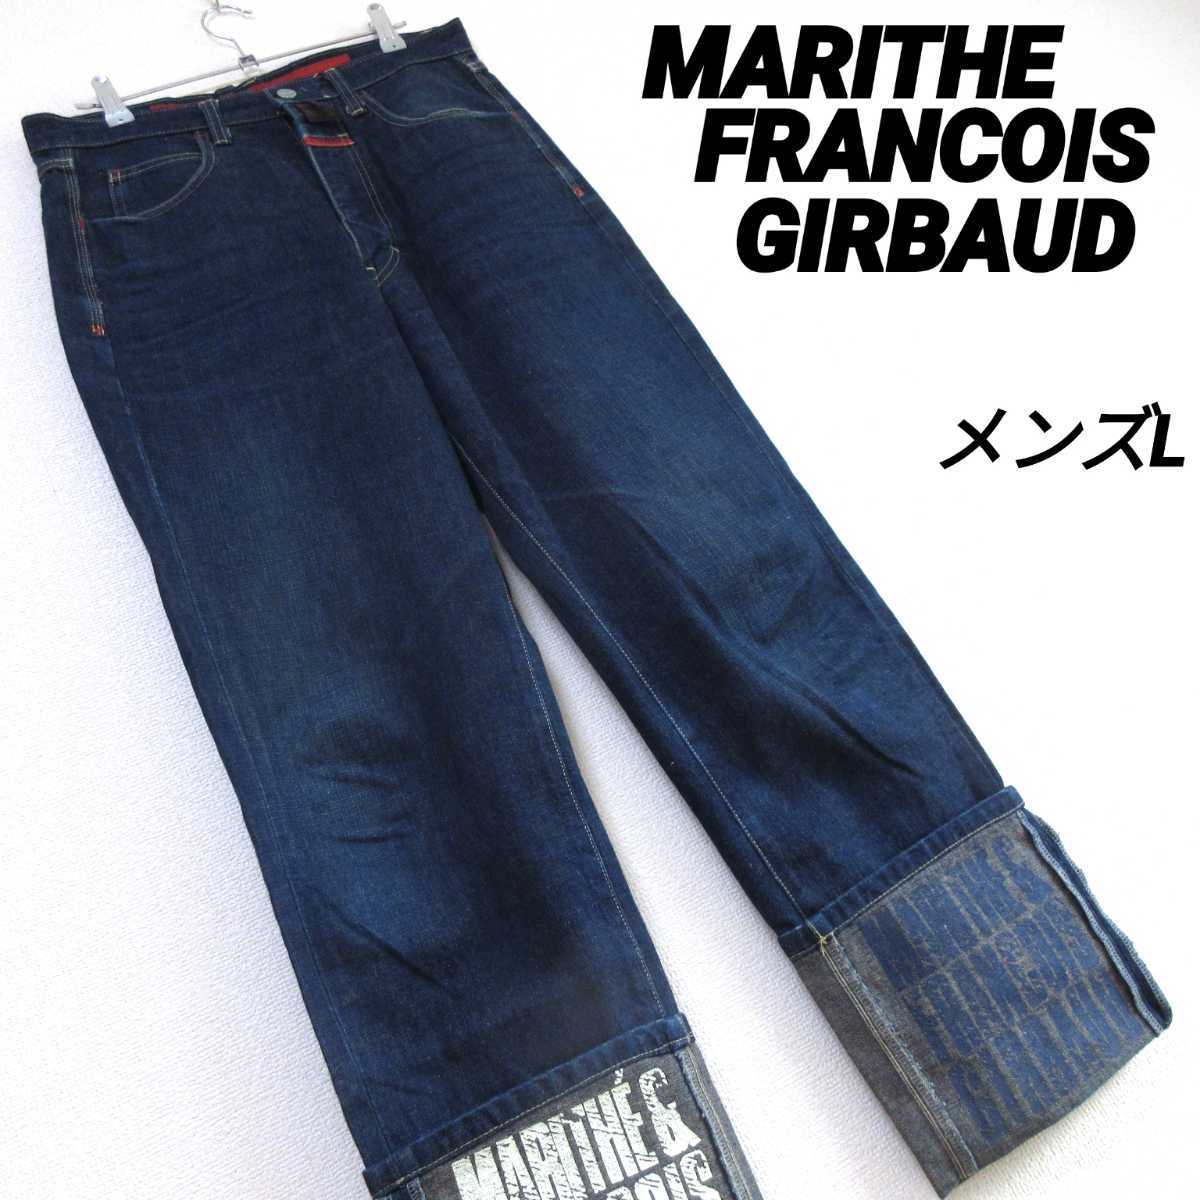 MARITHE+FRANCOIS GIRBAUD 刺繍 バギーパンツ デニム/ジーンズ パンツ メンズ 格安即決